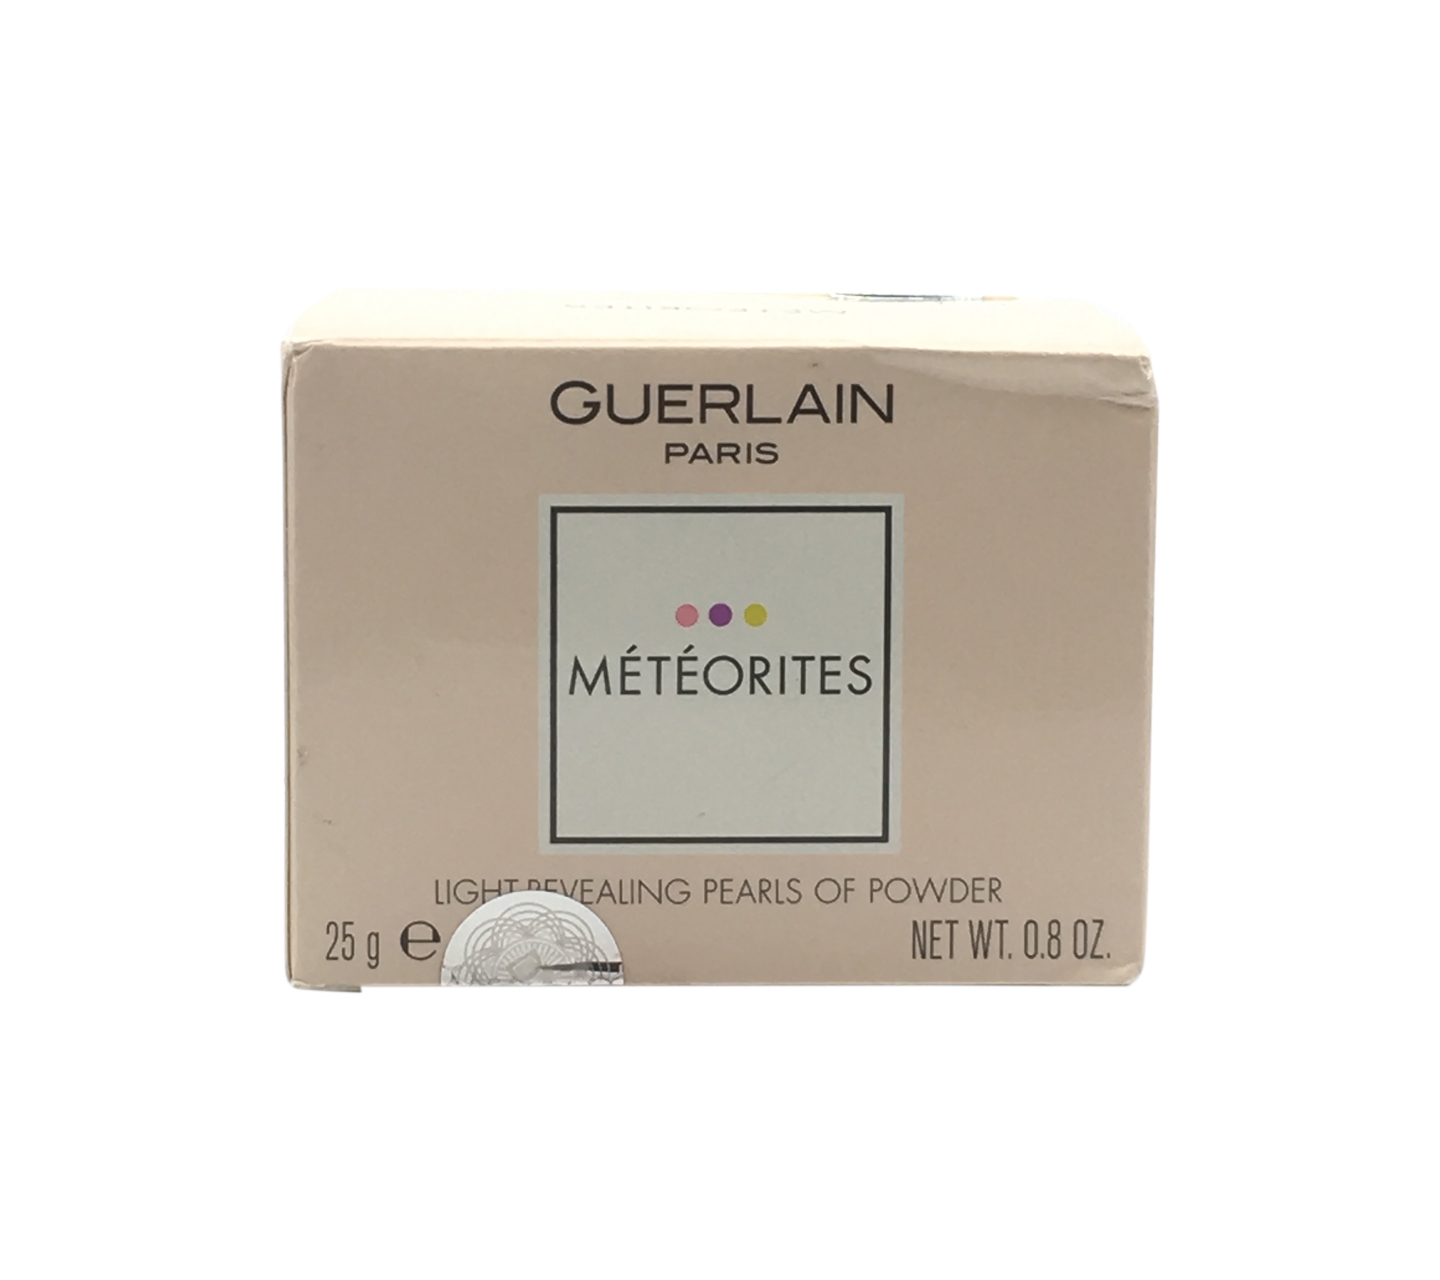 Guerlain 3 Medium Meteorites Light Revealing Pearls of Powder Faces